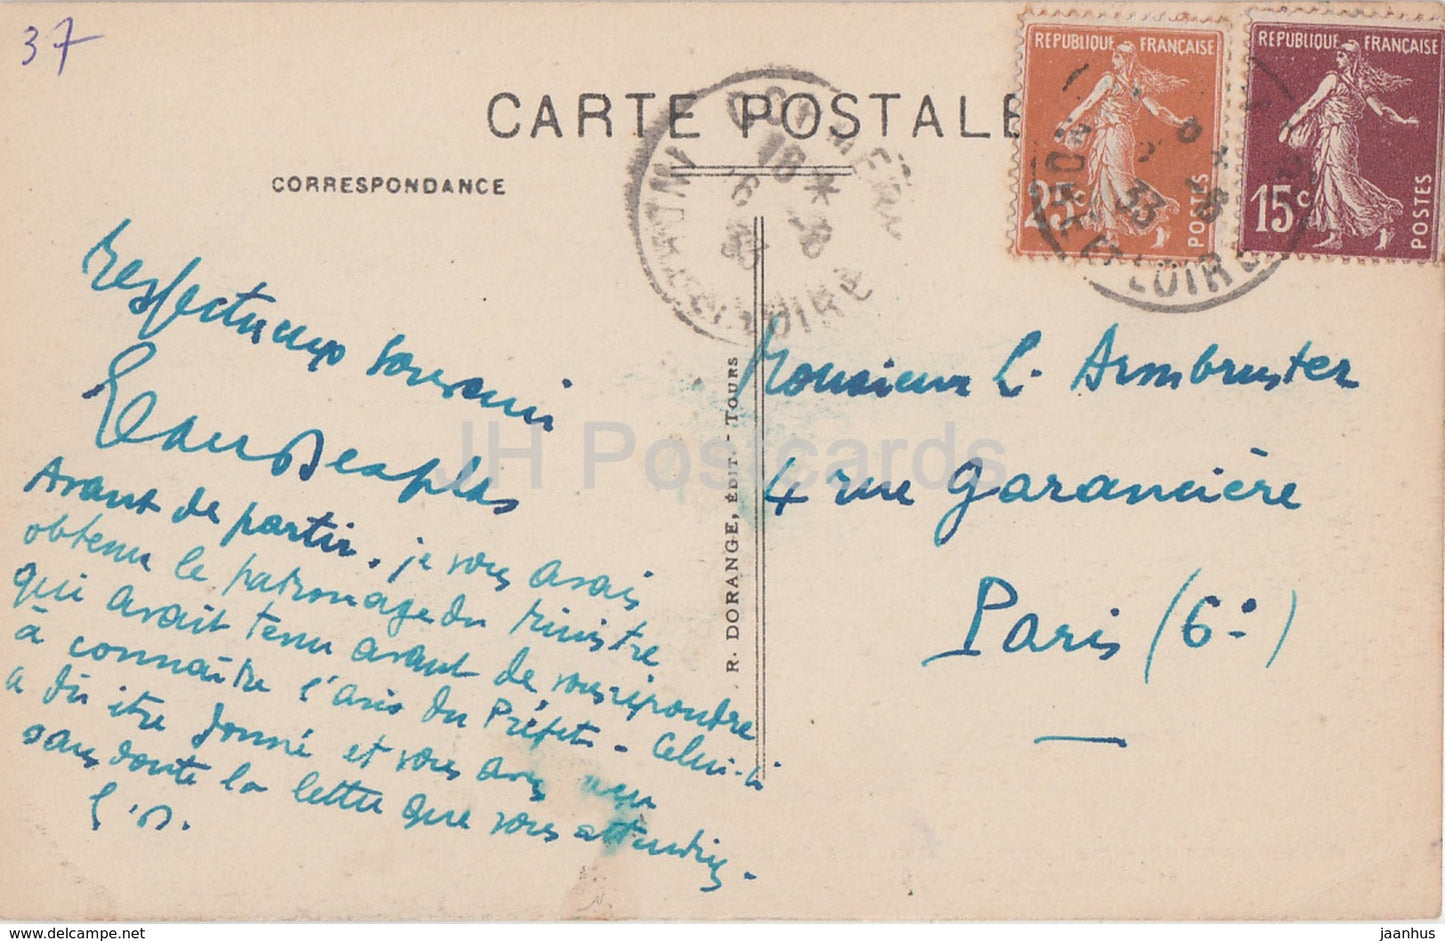 Loches - Le Donjon - Cachot ou fut enferme Ludovic Sforza - château - 13 - carte postale ancienne - 1933 - France - occasion